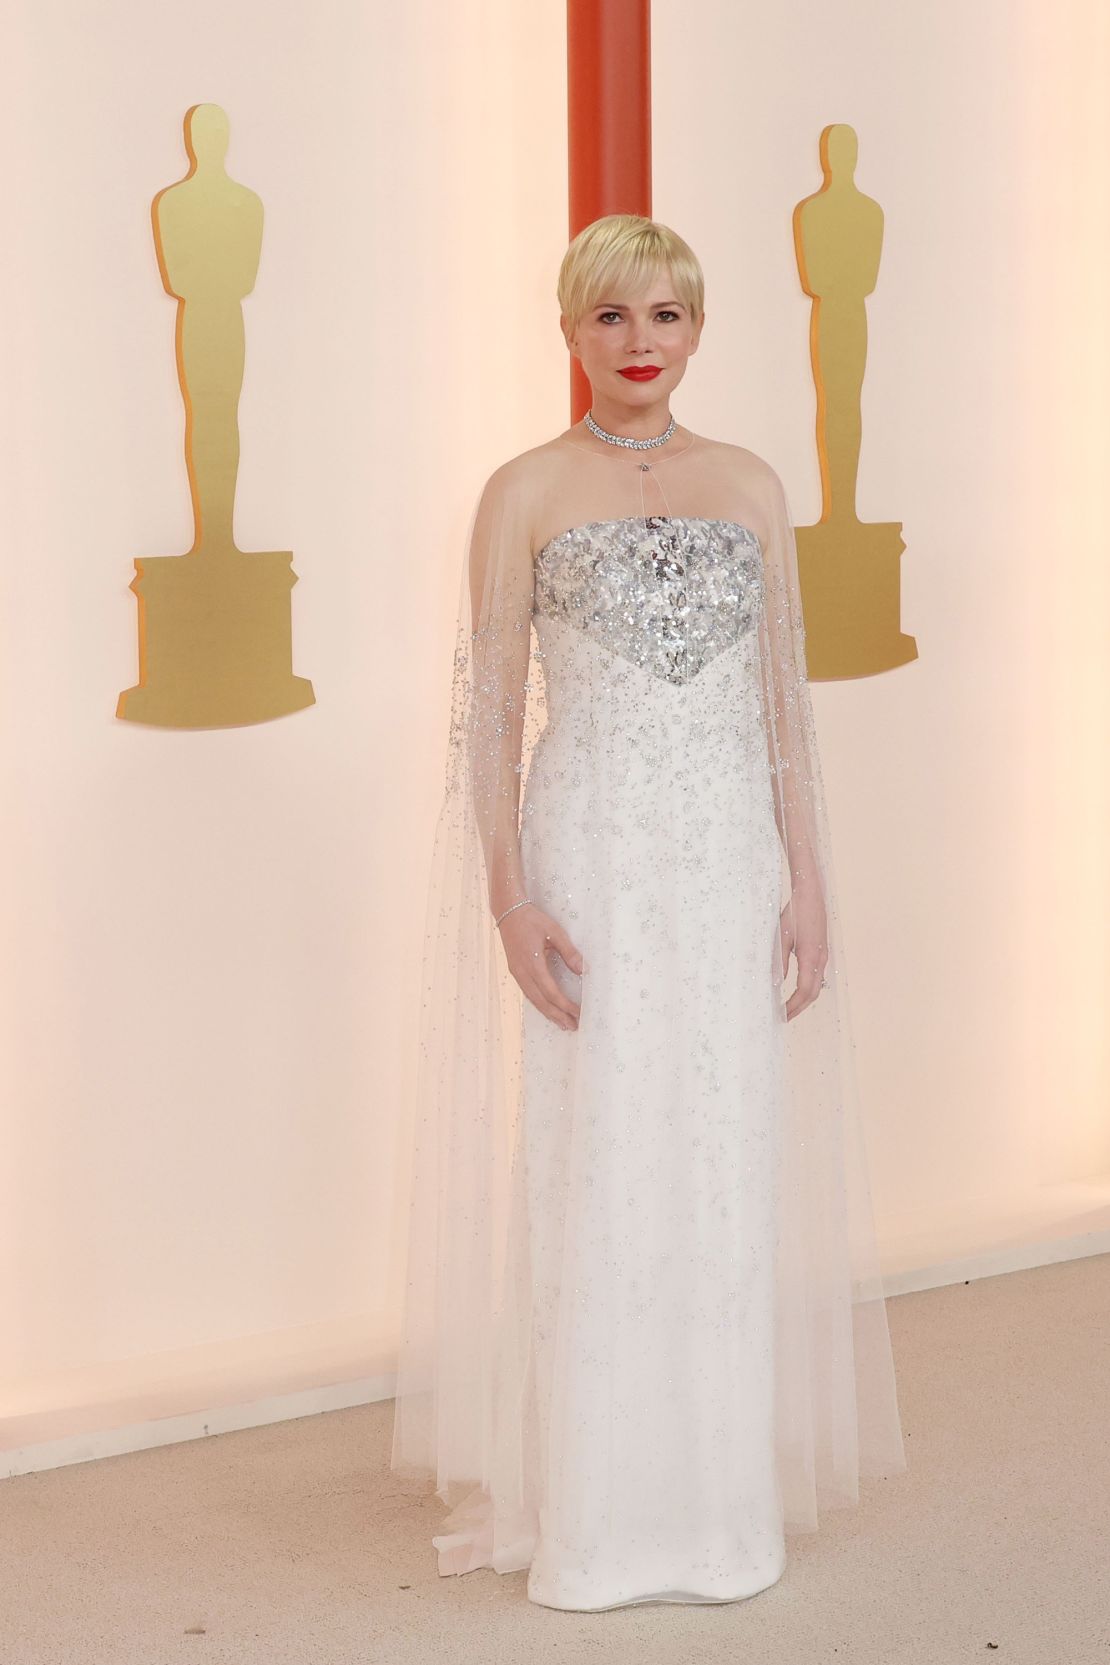 Ana de Armas Wears Bejeweled Louis Vuitton Gown to 2023 Golden Globes